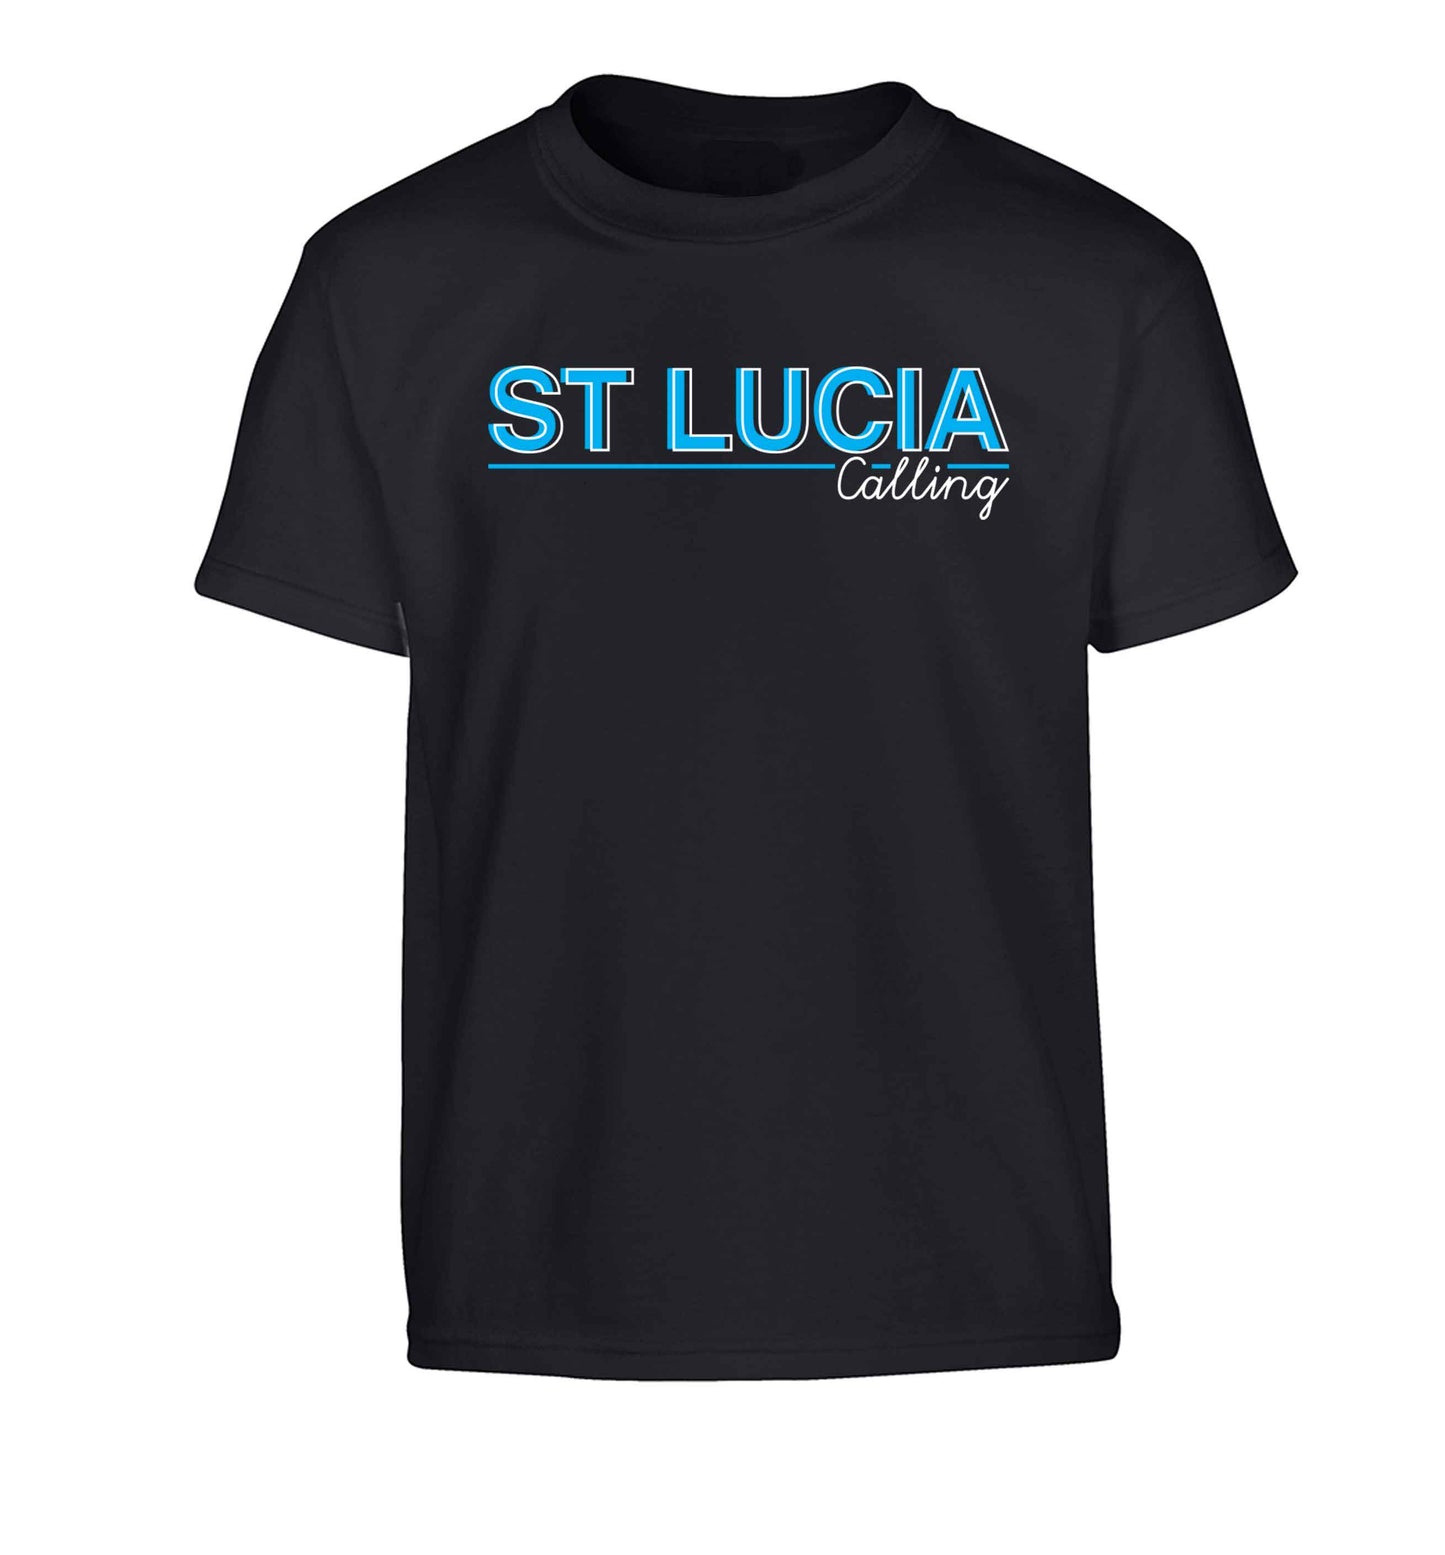 St Lucia calling Children's black Tshirt 12-13 Years